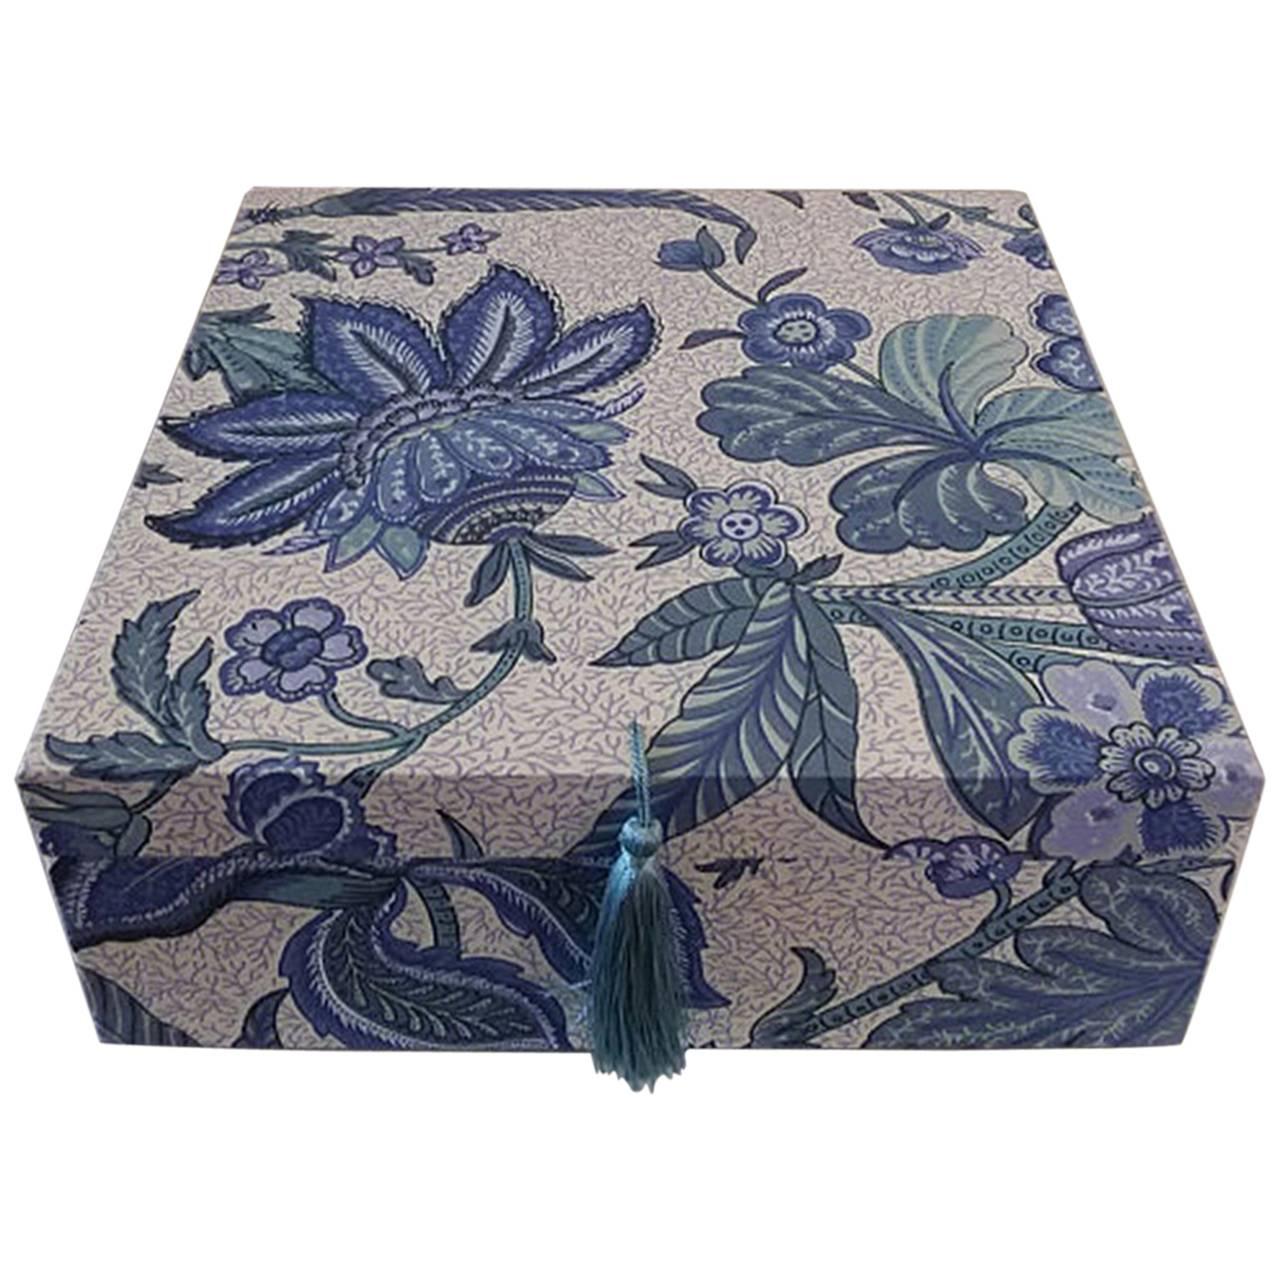 Decorative Cotton Fabric Storage Box for Scarves